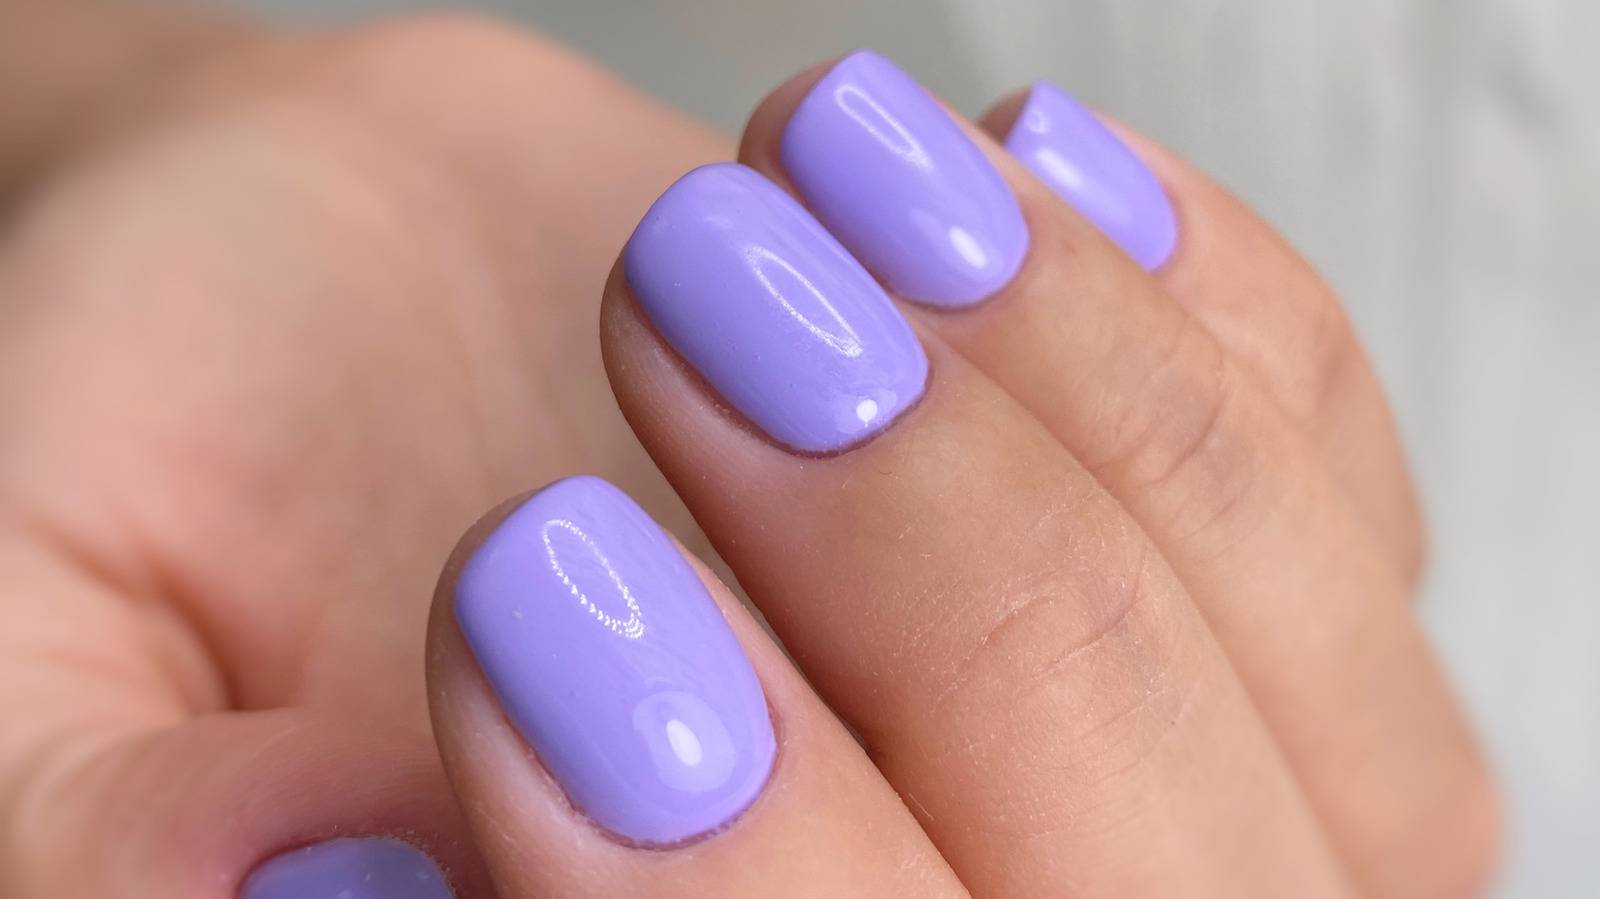 4. Lavender Ombre Nail Art - wide 3